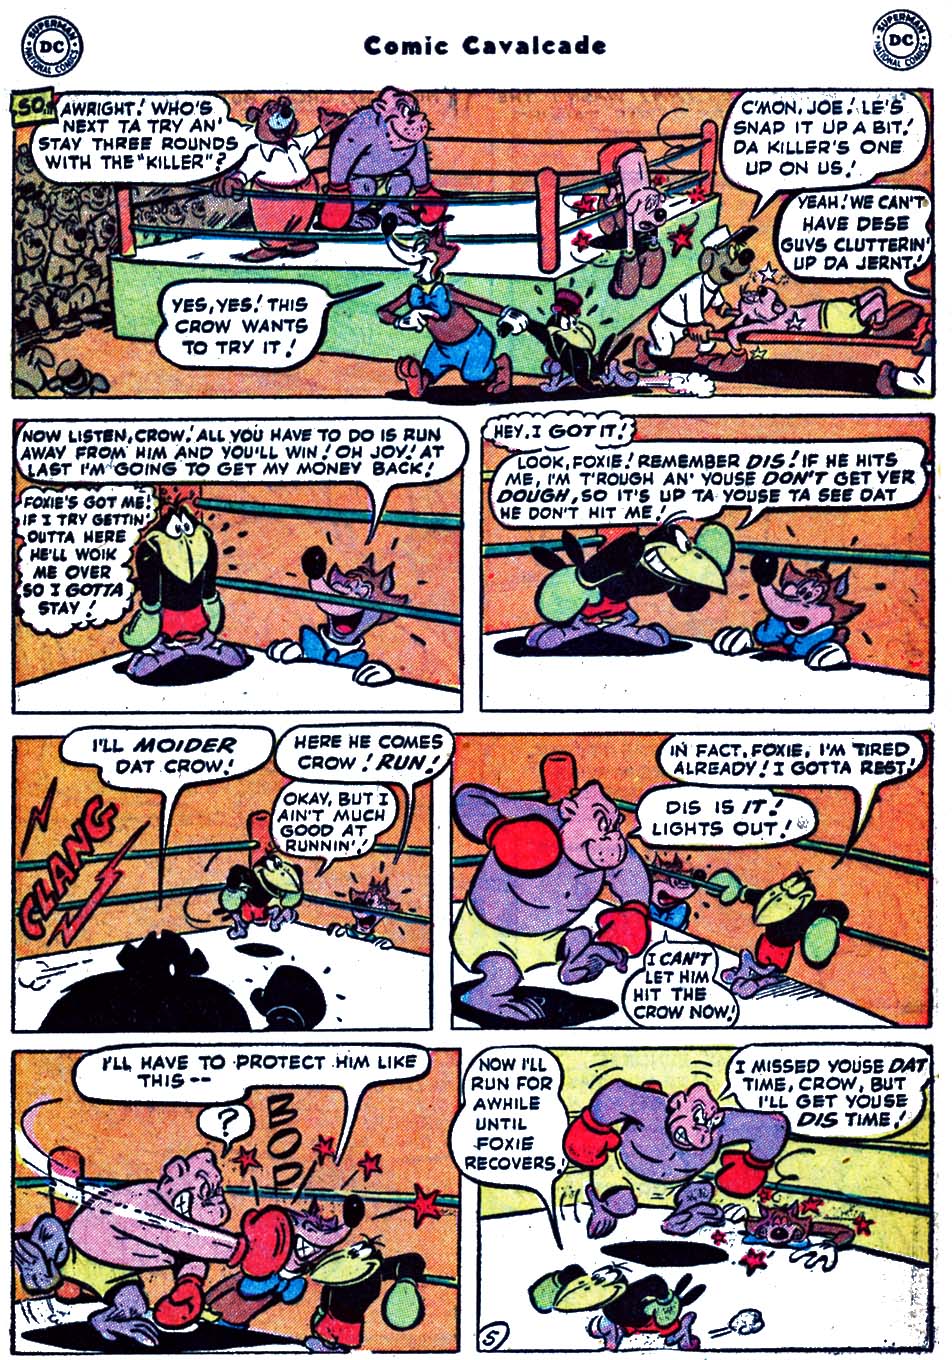 Comic Cavalcade issue 55 - Page 7